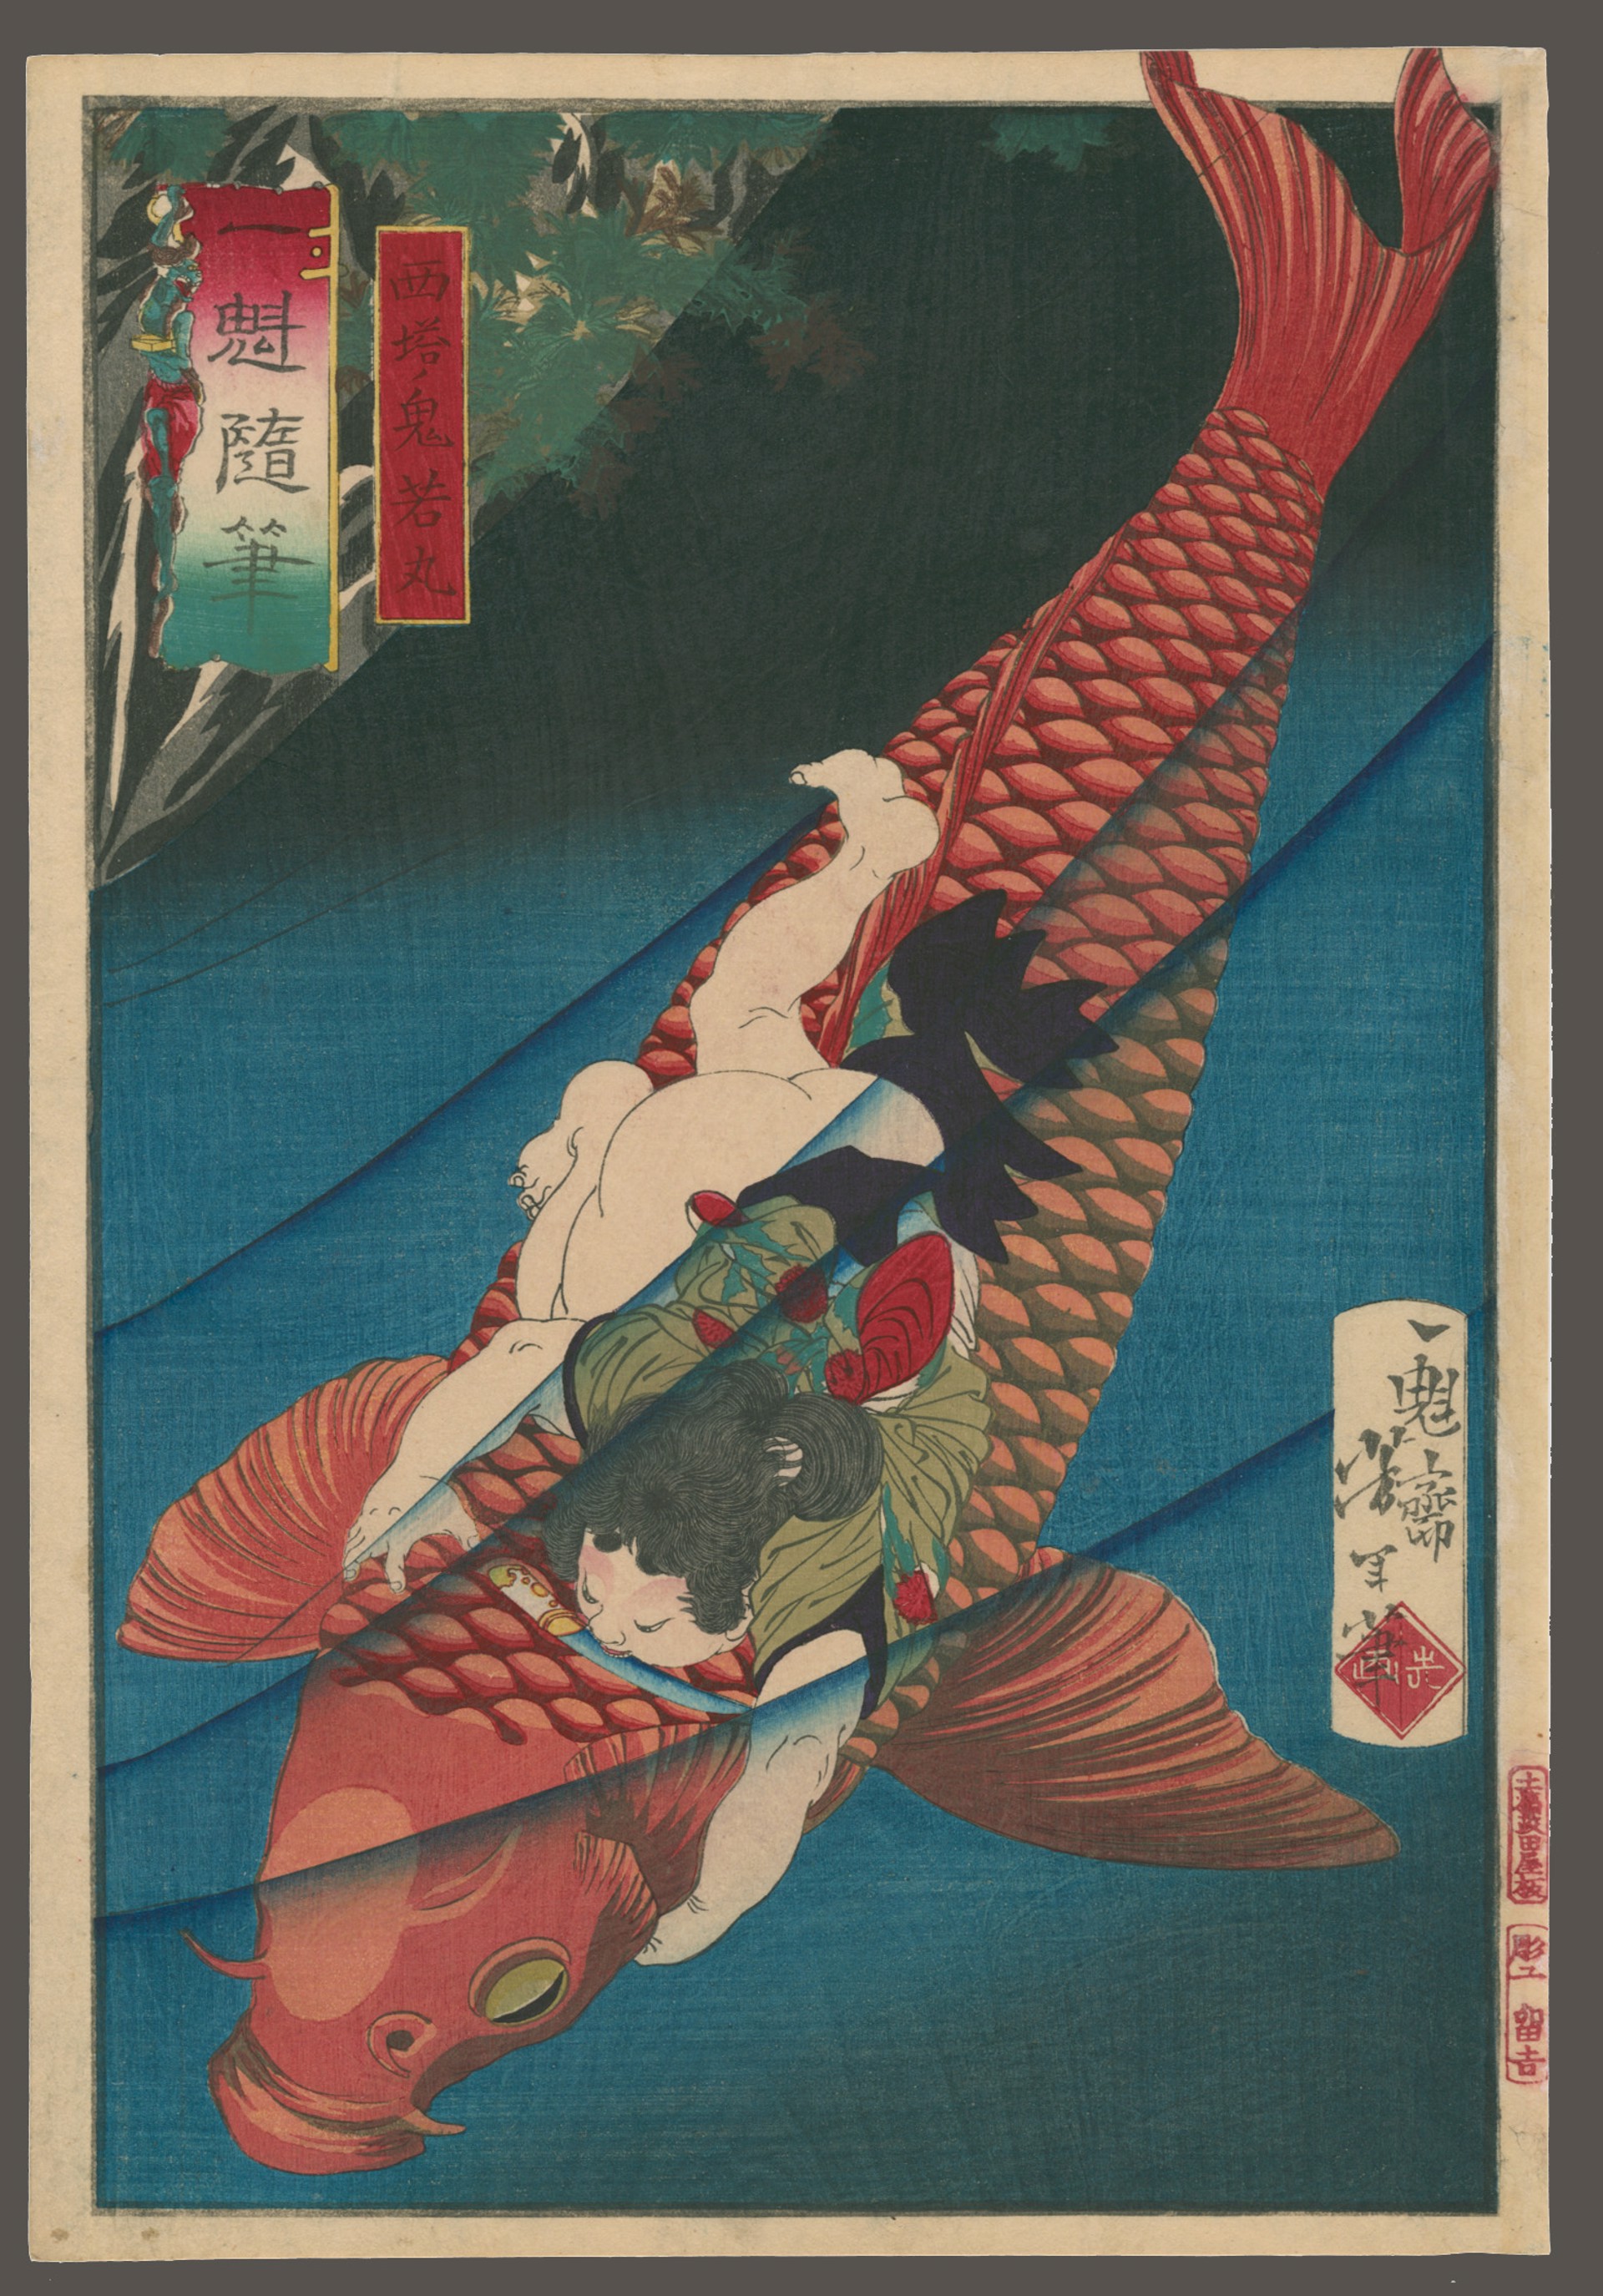 Oniwakamaru, the Young Devil Child (Benkei) fighting the Giant Carp in the Bishamon-go-taki Waterfall Essays by Yoshitoshi by Yoshitoshi